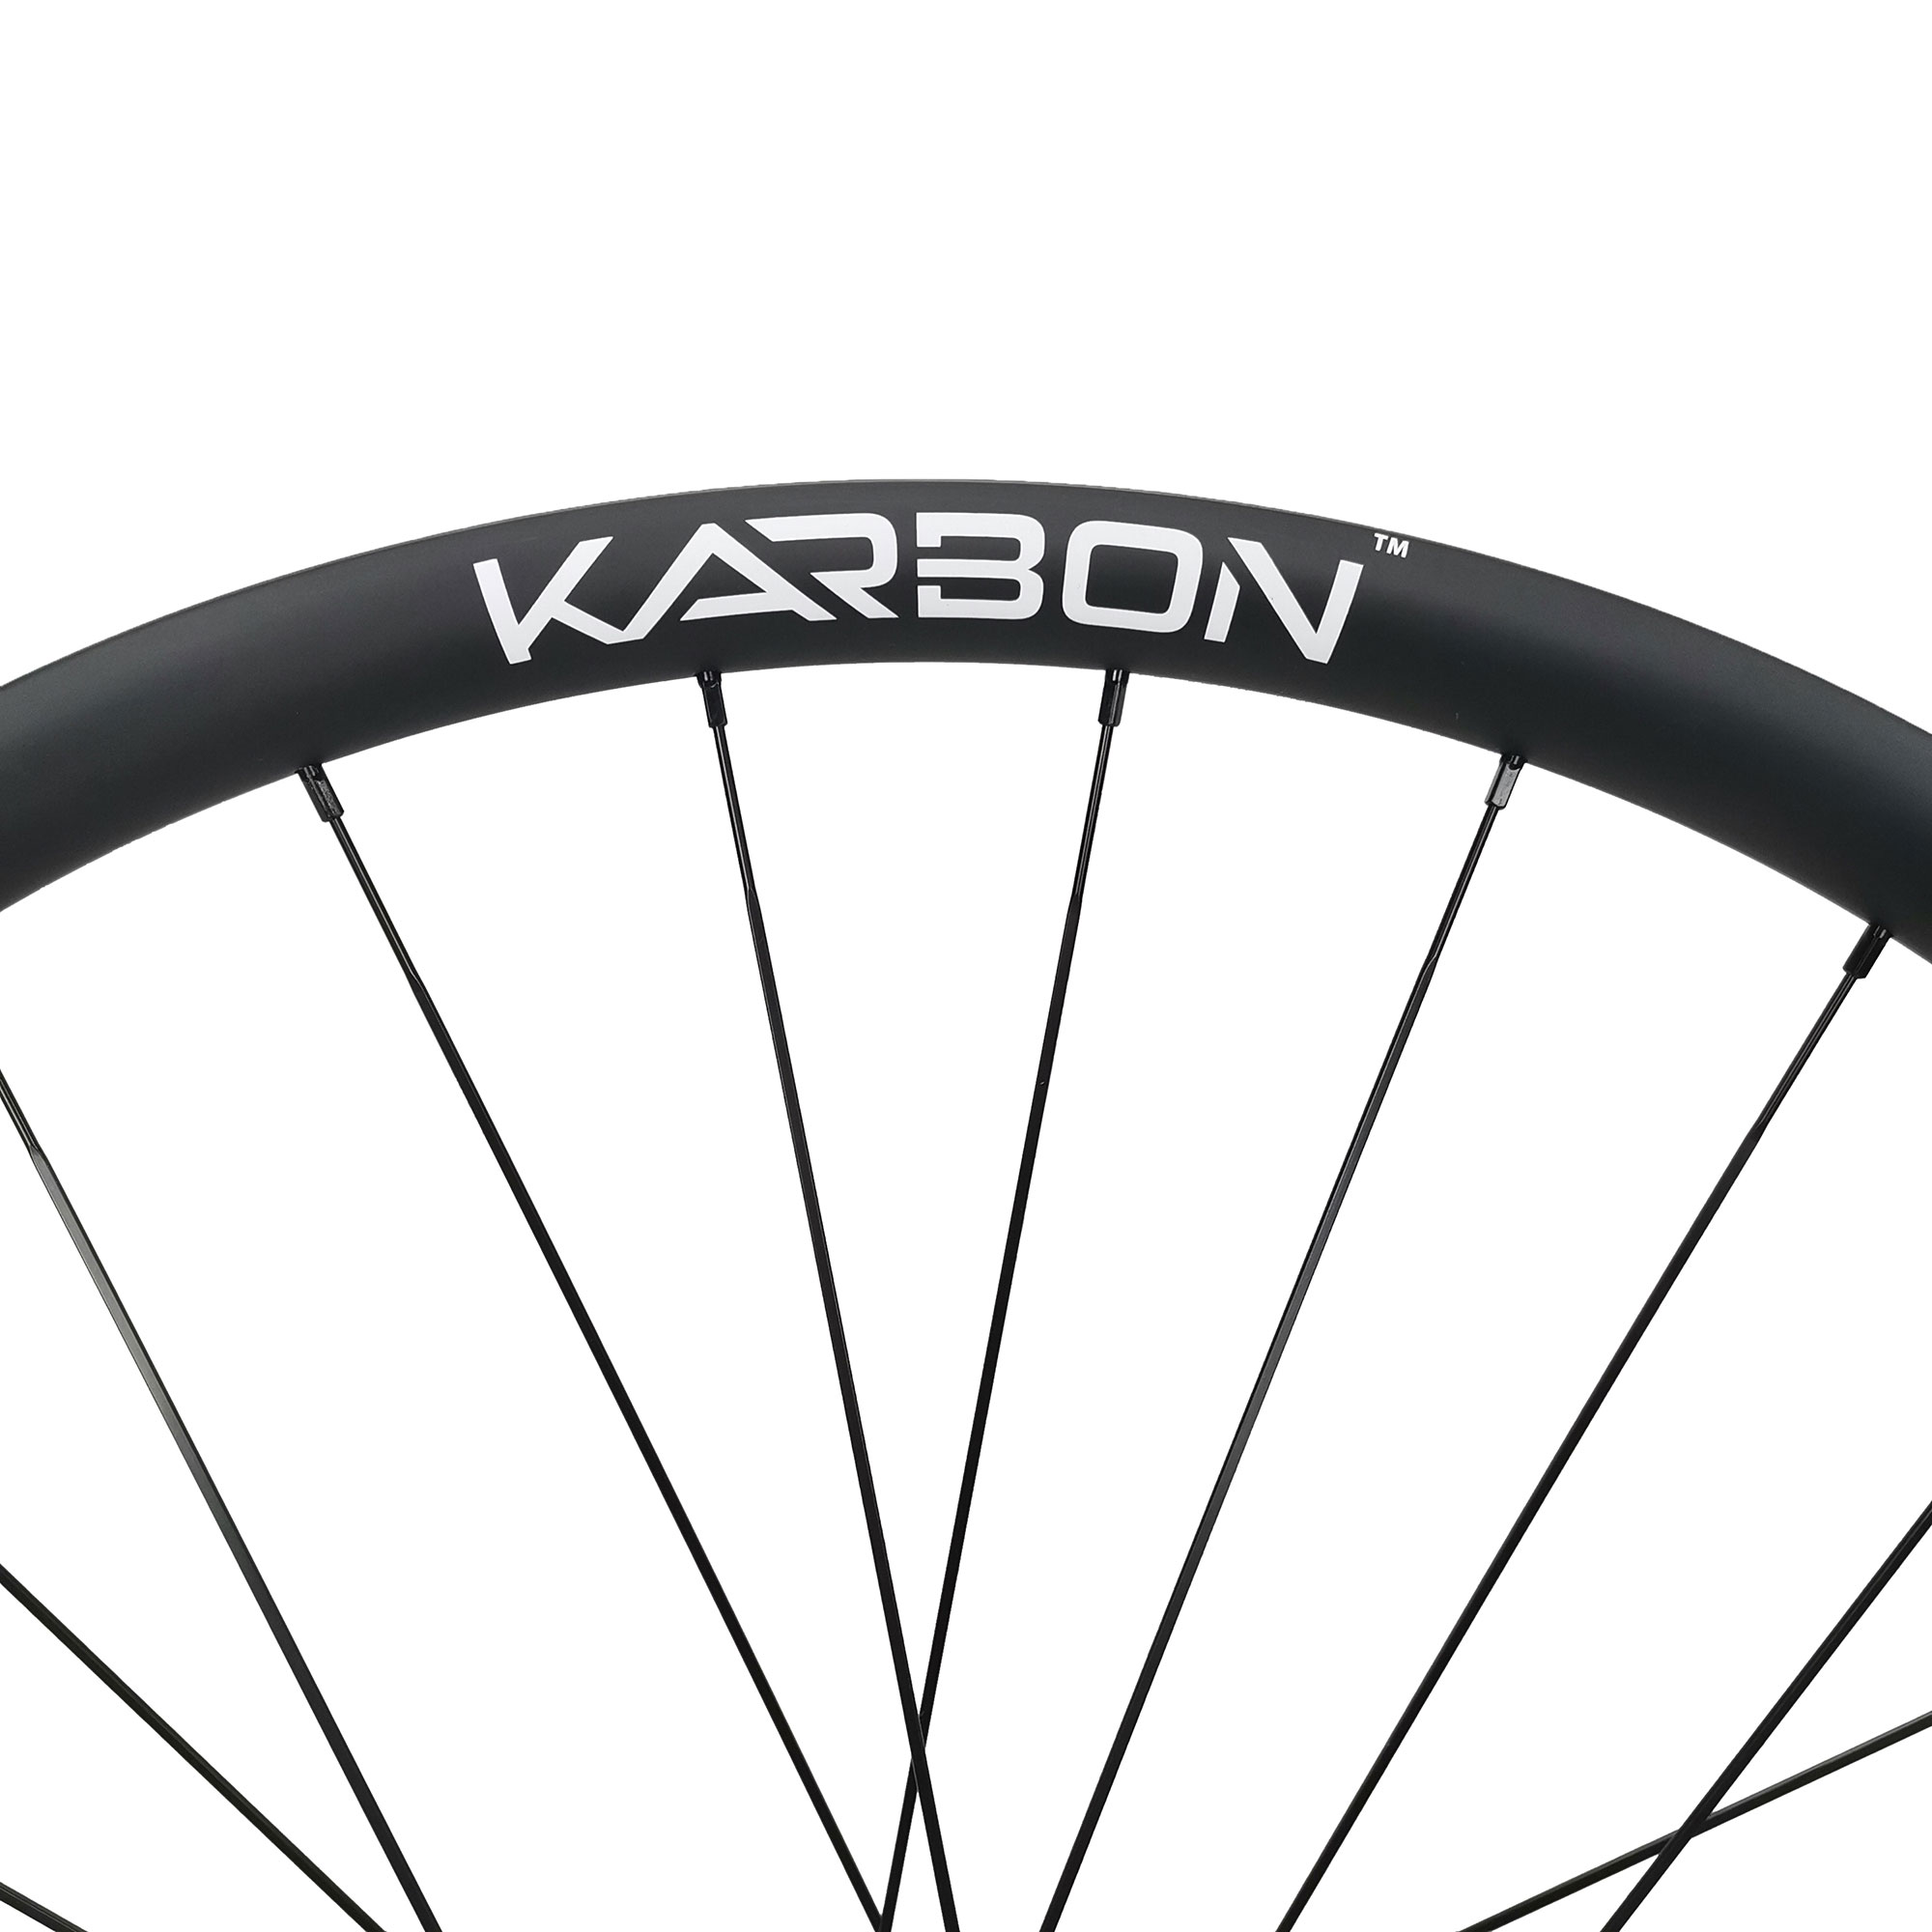 KARBON 2933 Carbon Fiber Boost 29" MTB Wheelset